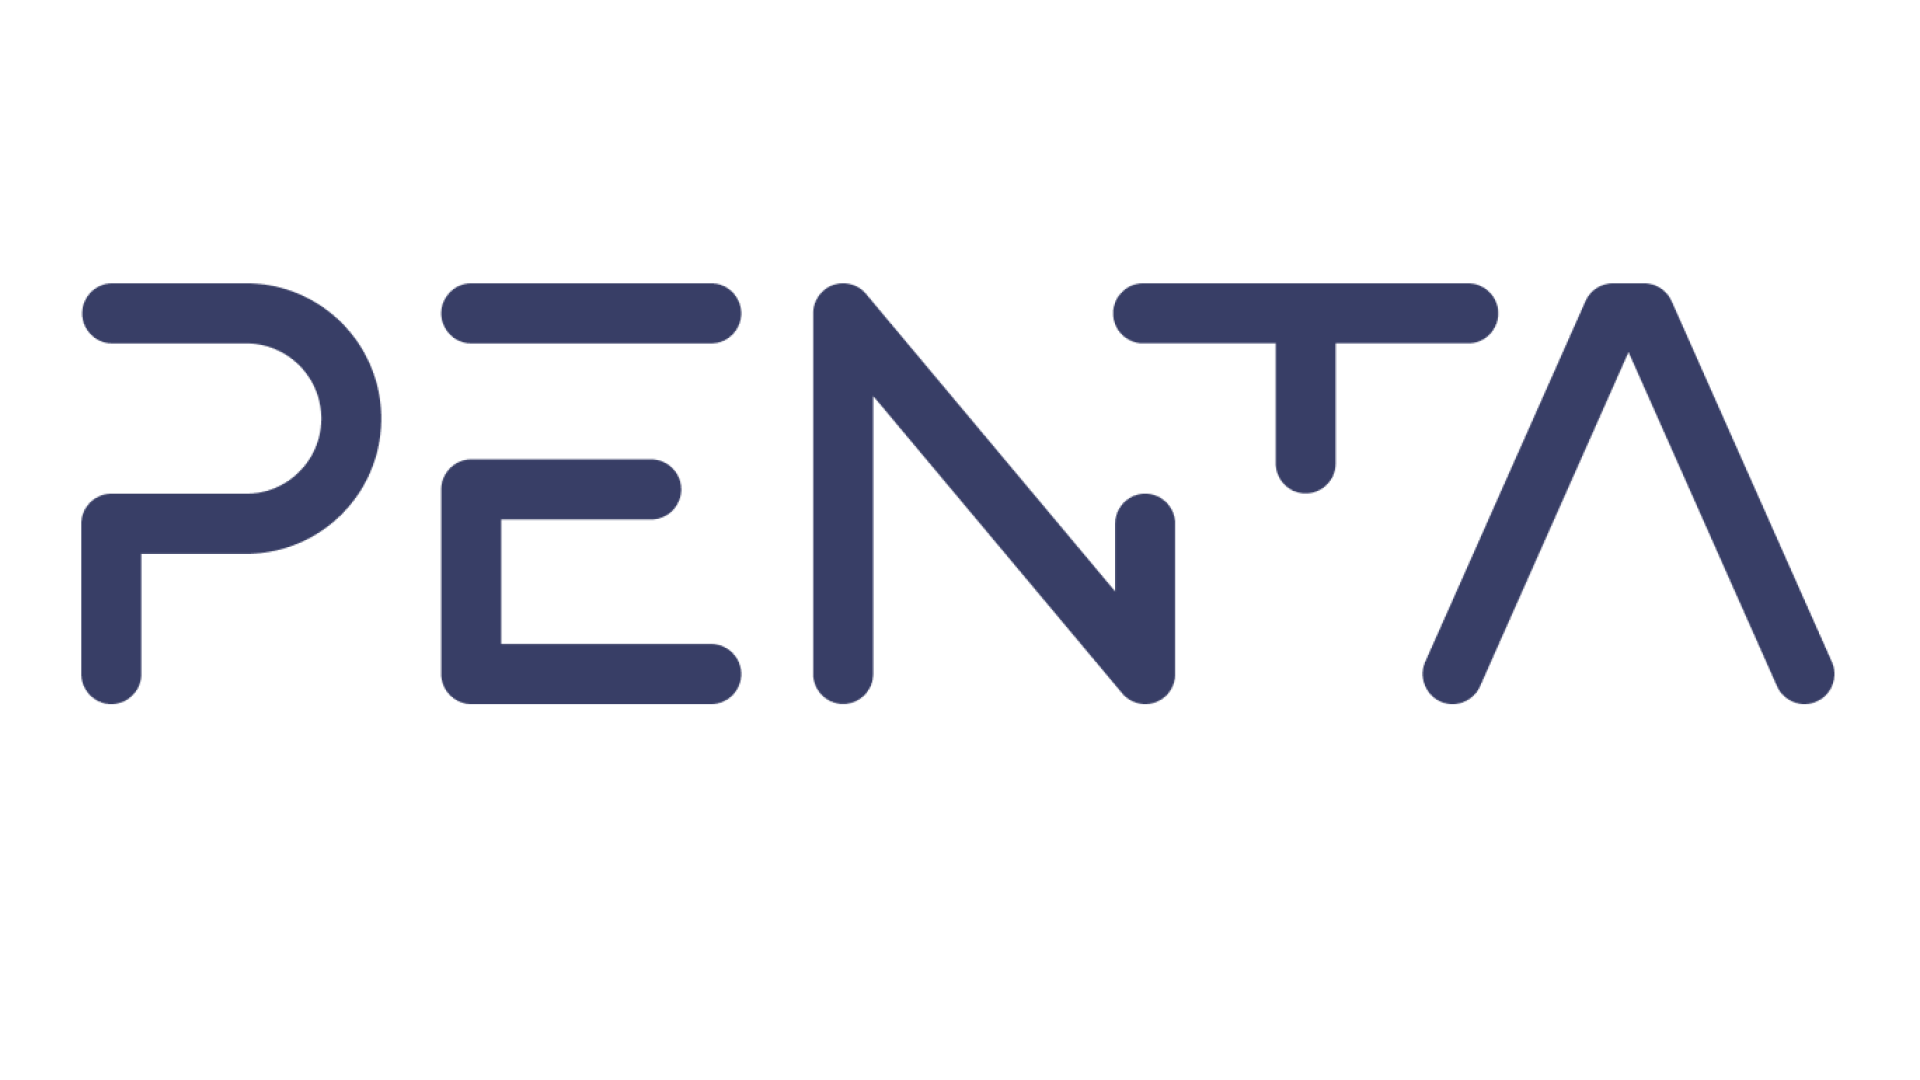 Das Logo von Penta | Foto: Penta